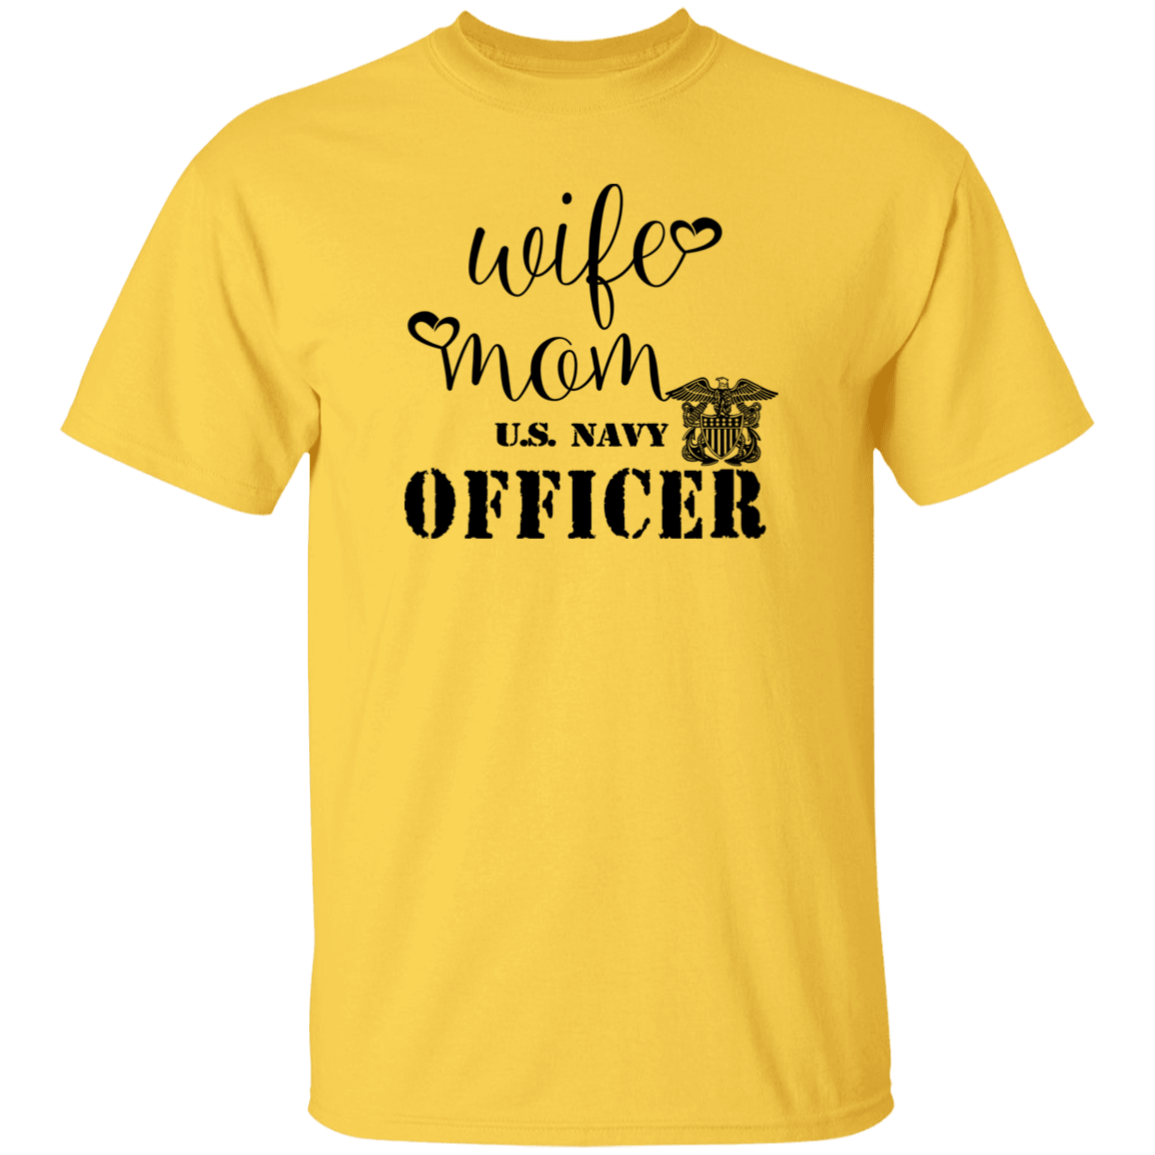 WMO 5.3 oz. T-Shirt